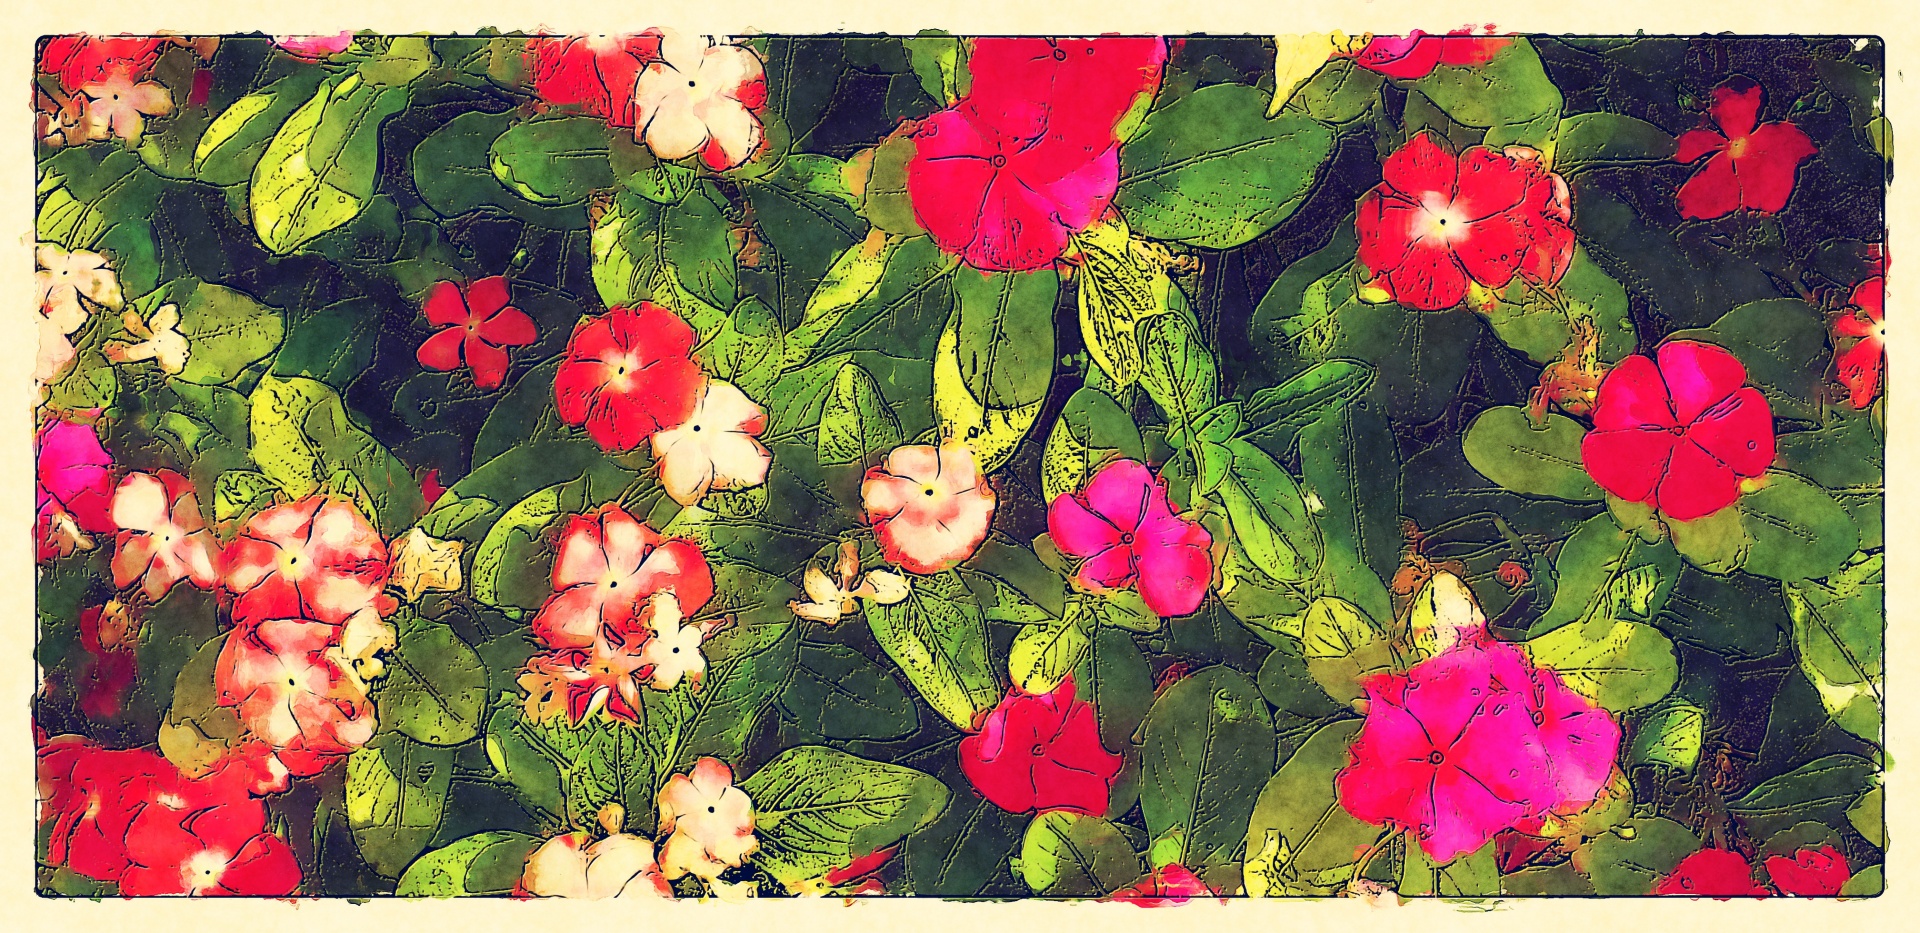 Flores Impatiens rosa-rojas